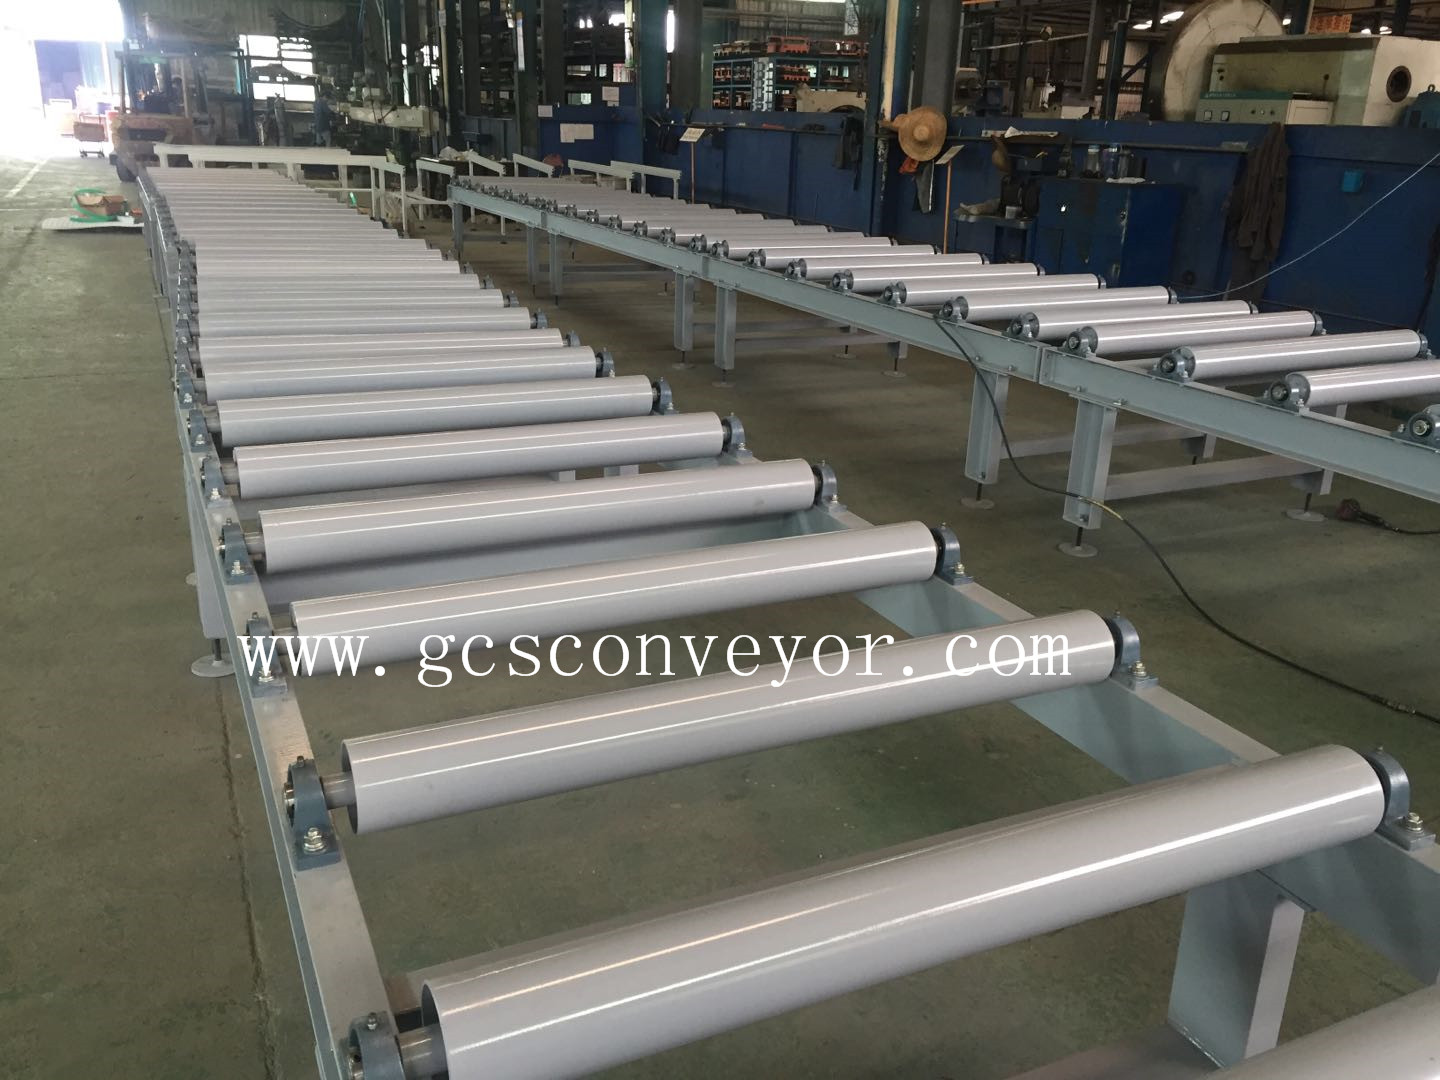 Heavy Duty Roller Conveyor LinePower Sprocket Roller Top China Supplies Conveyor Line